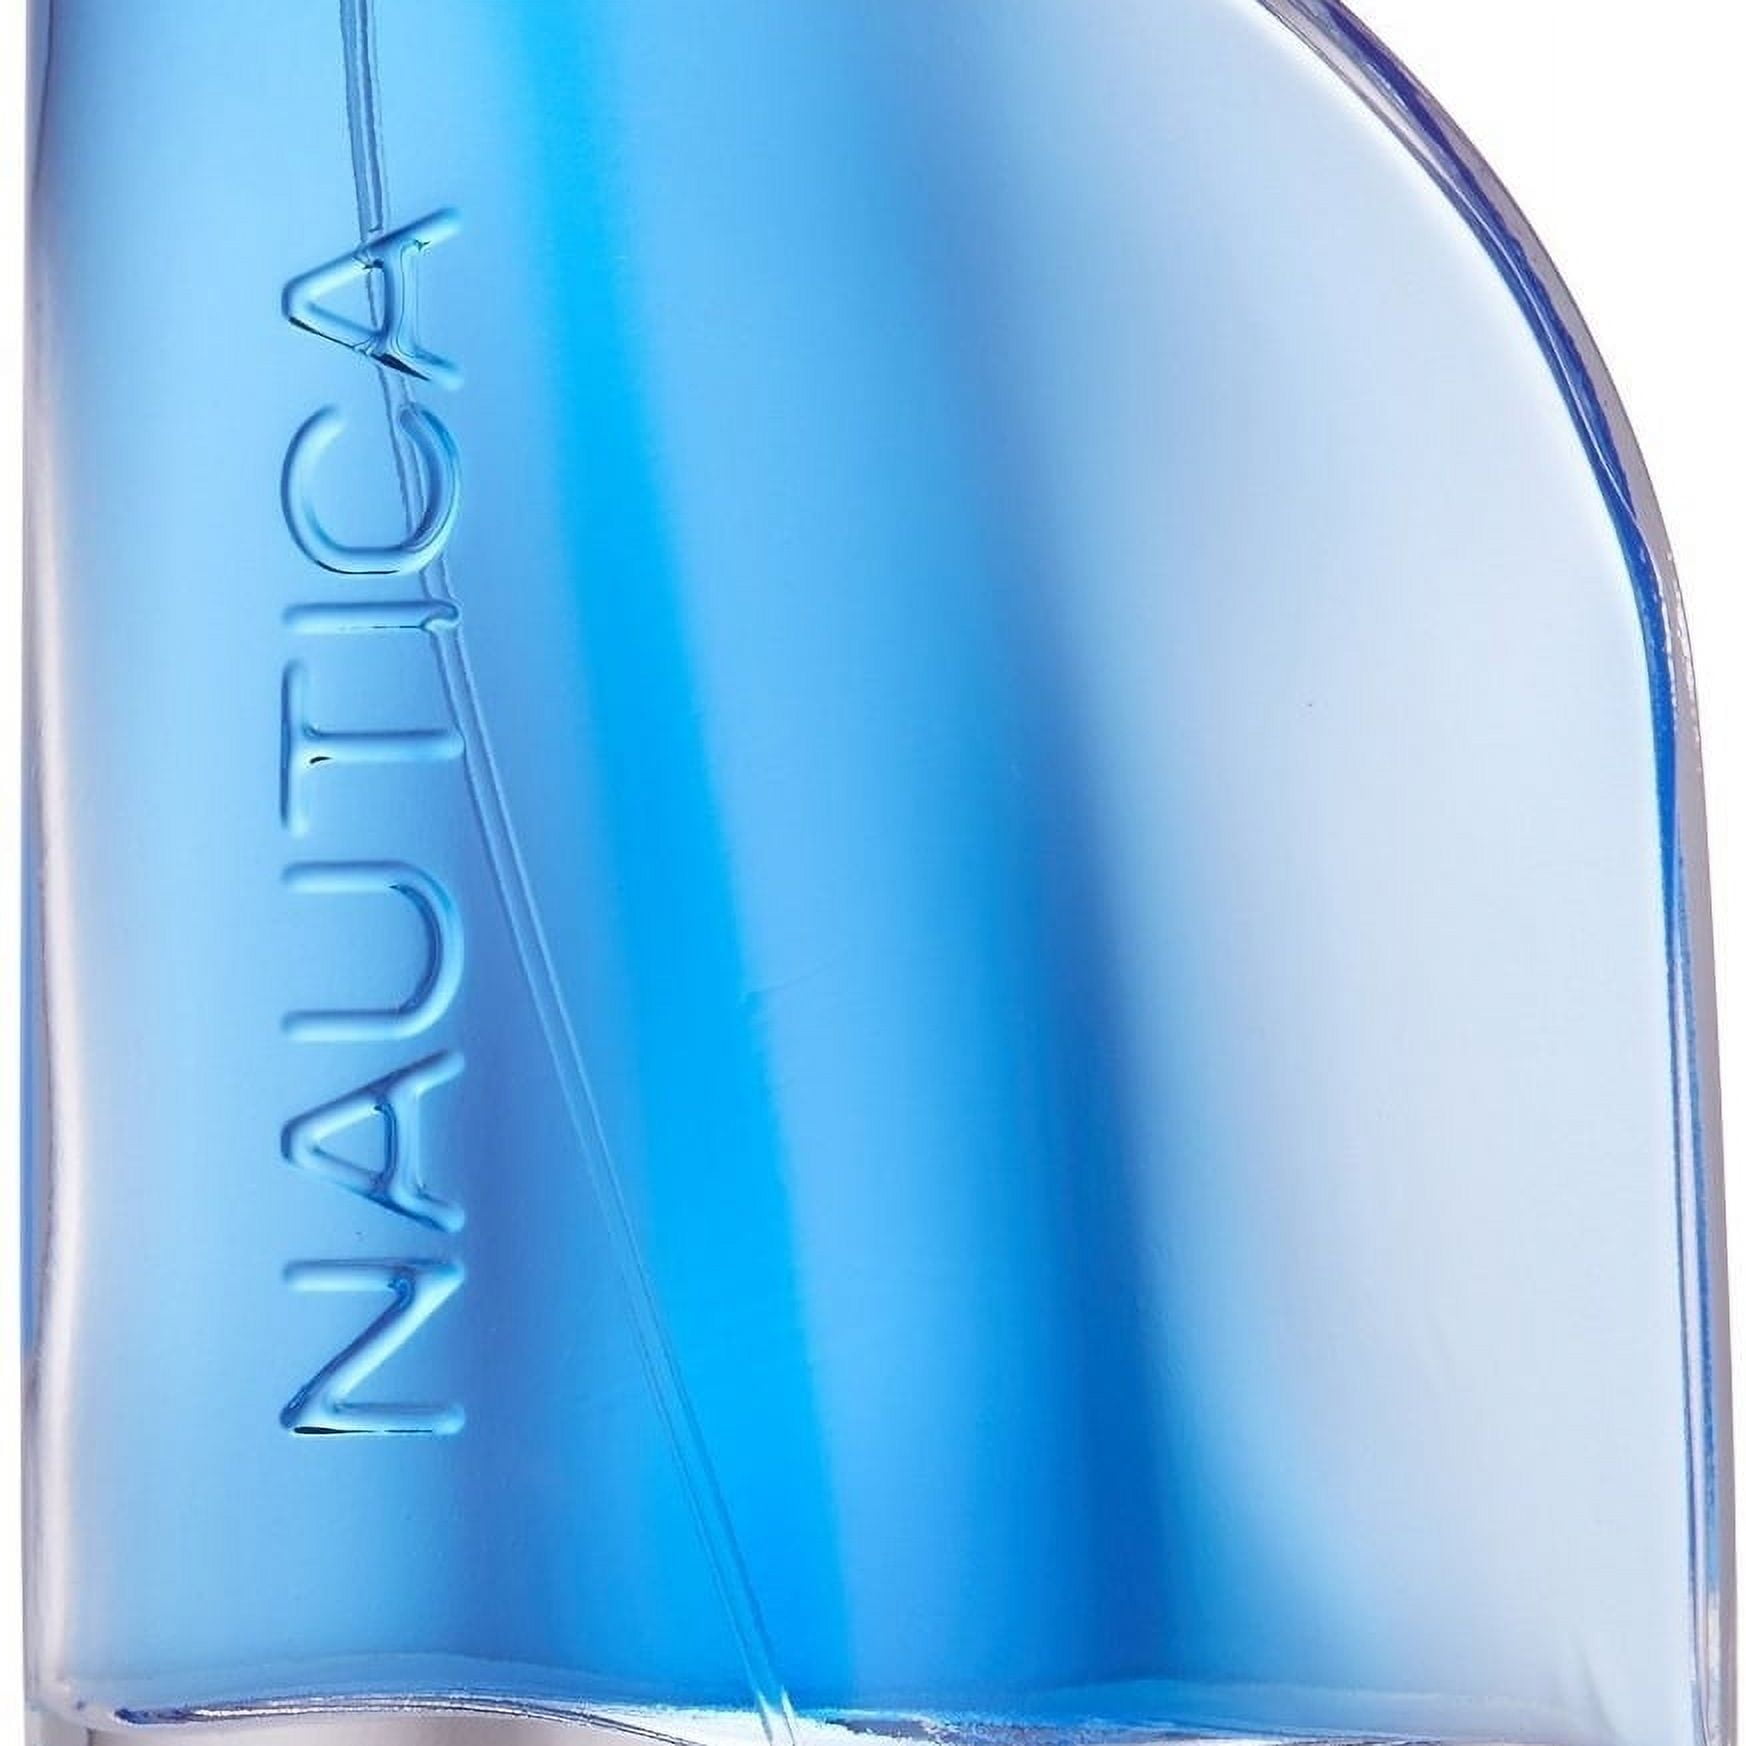 NAUTICA BLUE FOR MEN - EAU DE TOILETTE SPRAY, 3.4 OZ – Fragrance Room